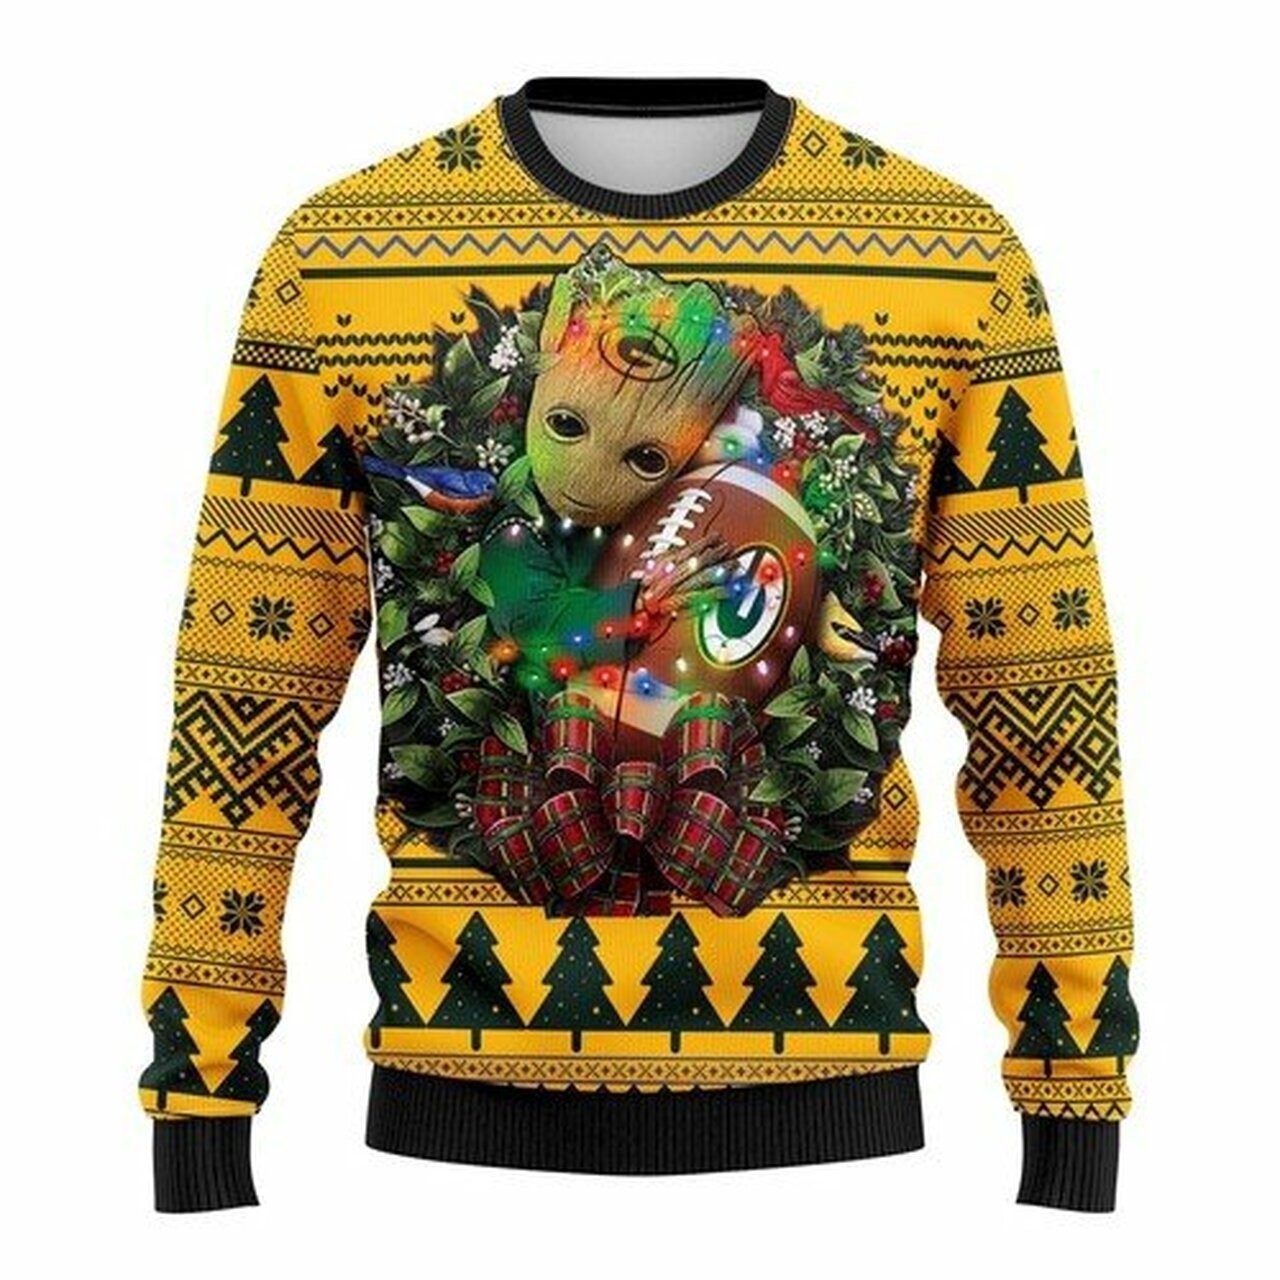 [ HOT ] NFL Green Bay Packers Groot hug ugly christmas sweater – Saleoff 040122